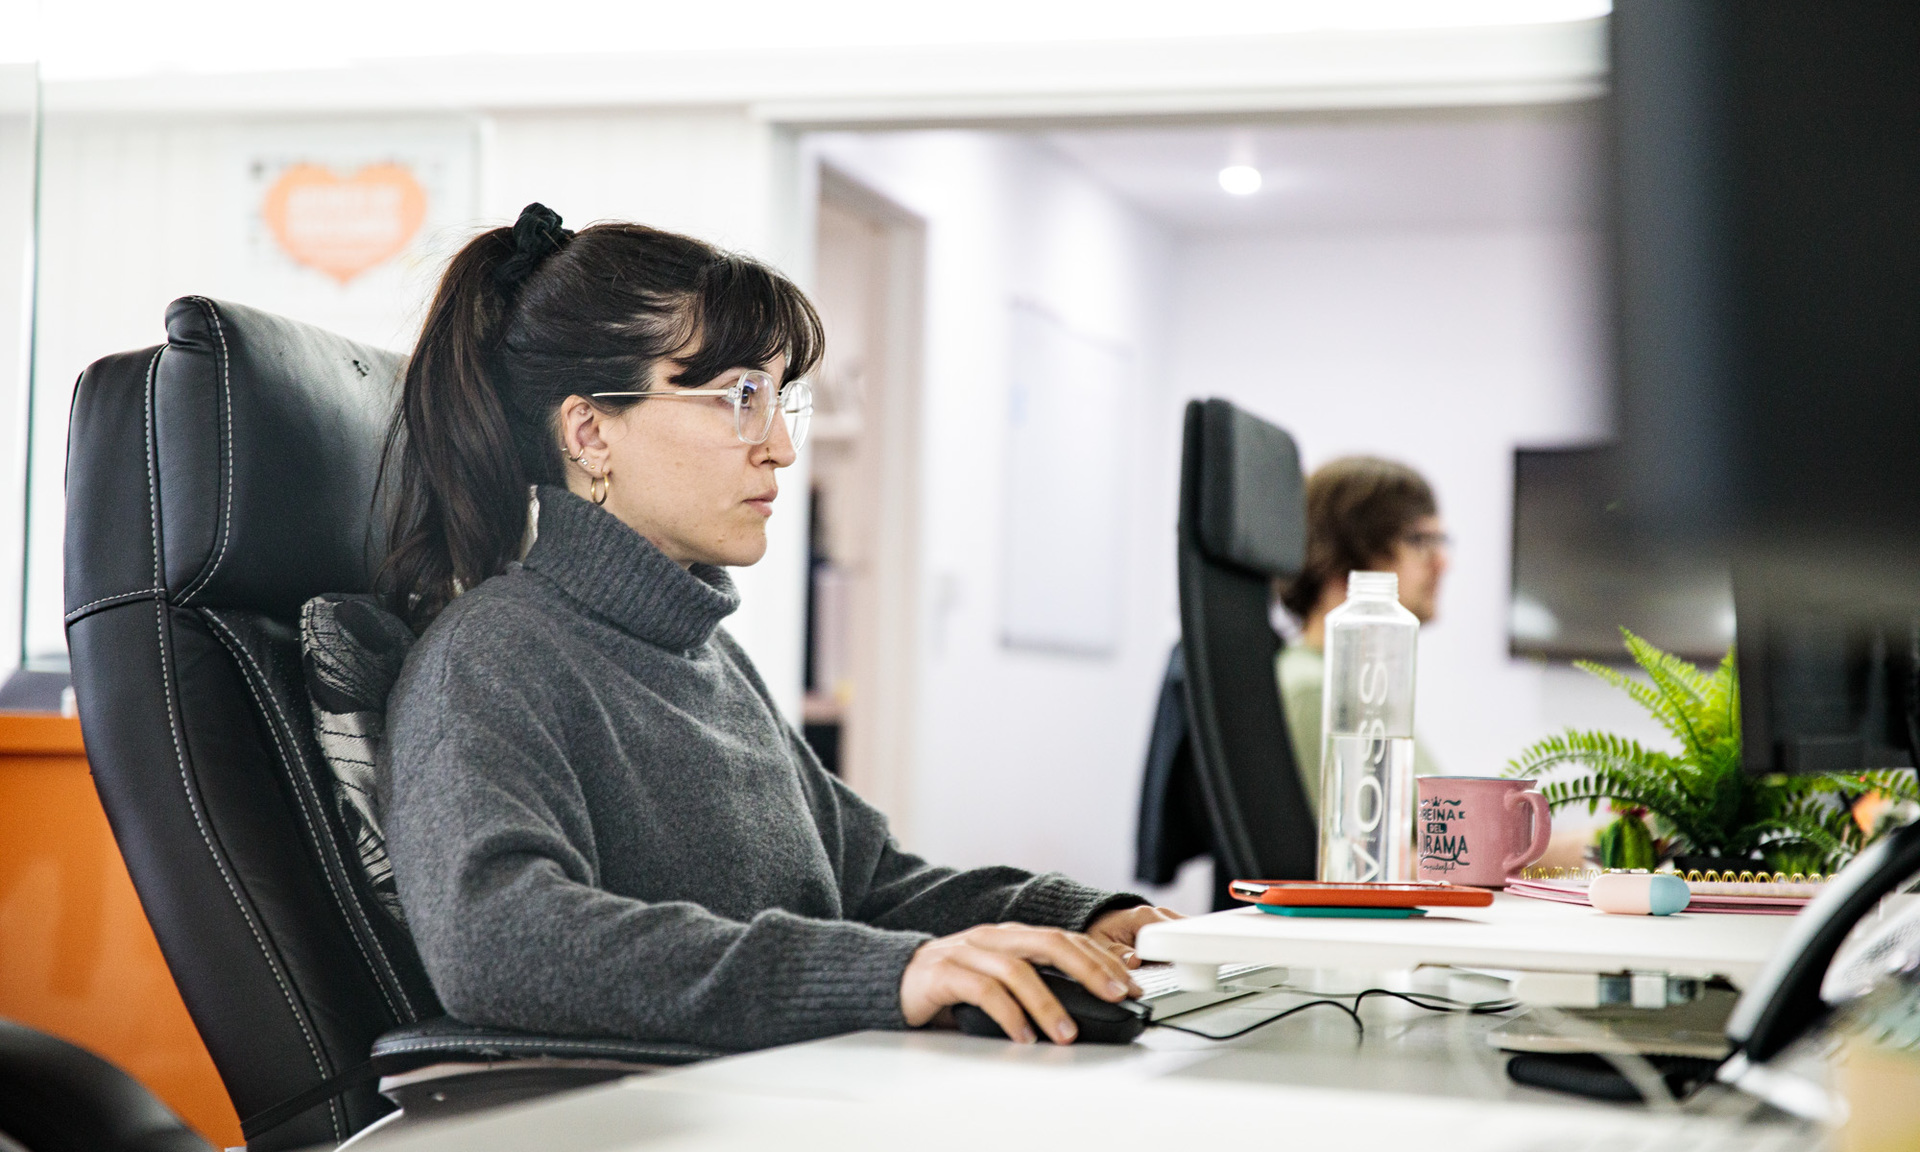 A woman sat at a desk, designing a responsive website